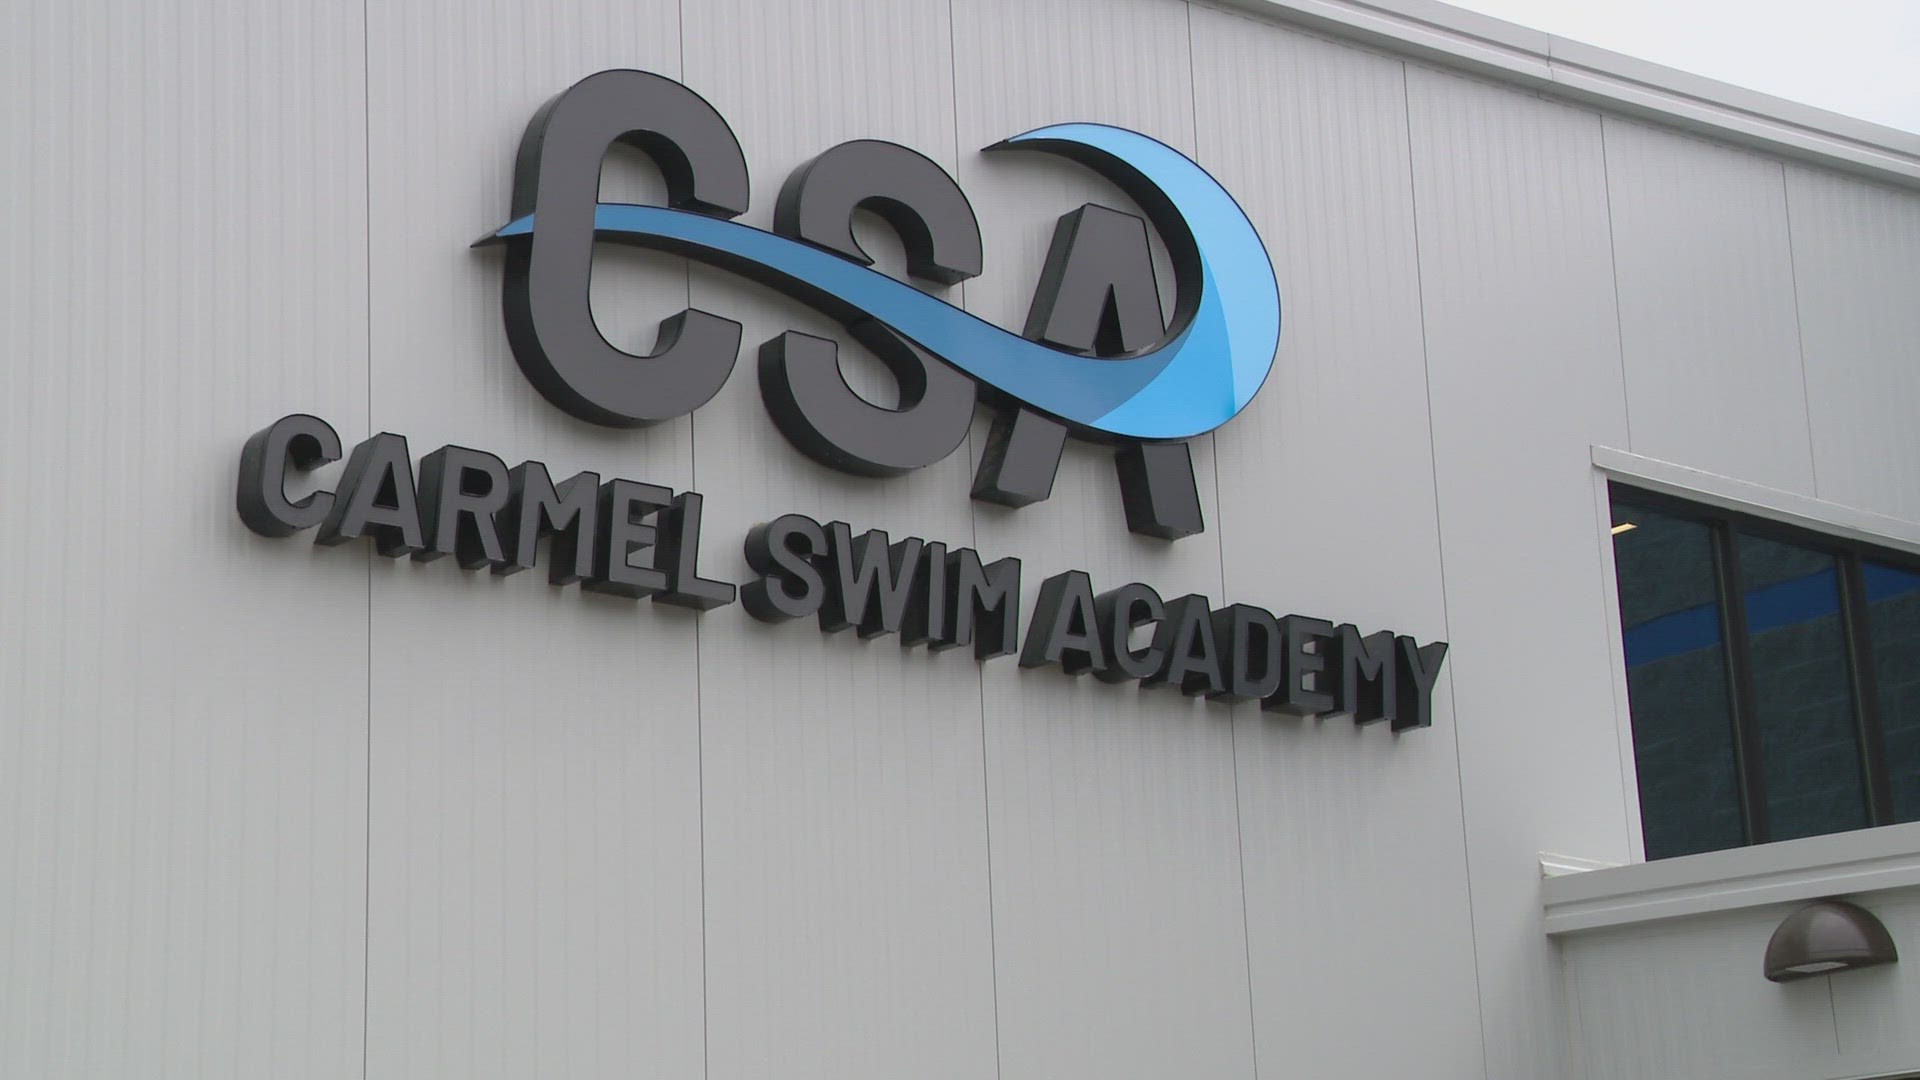 Carmel Swim Academy hosts open house with brand new pool